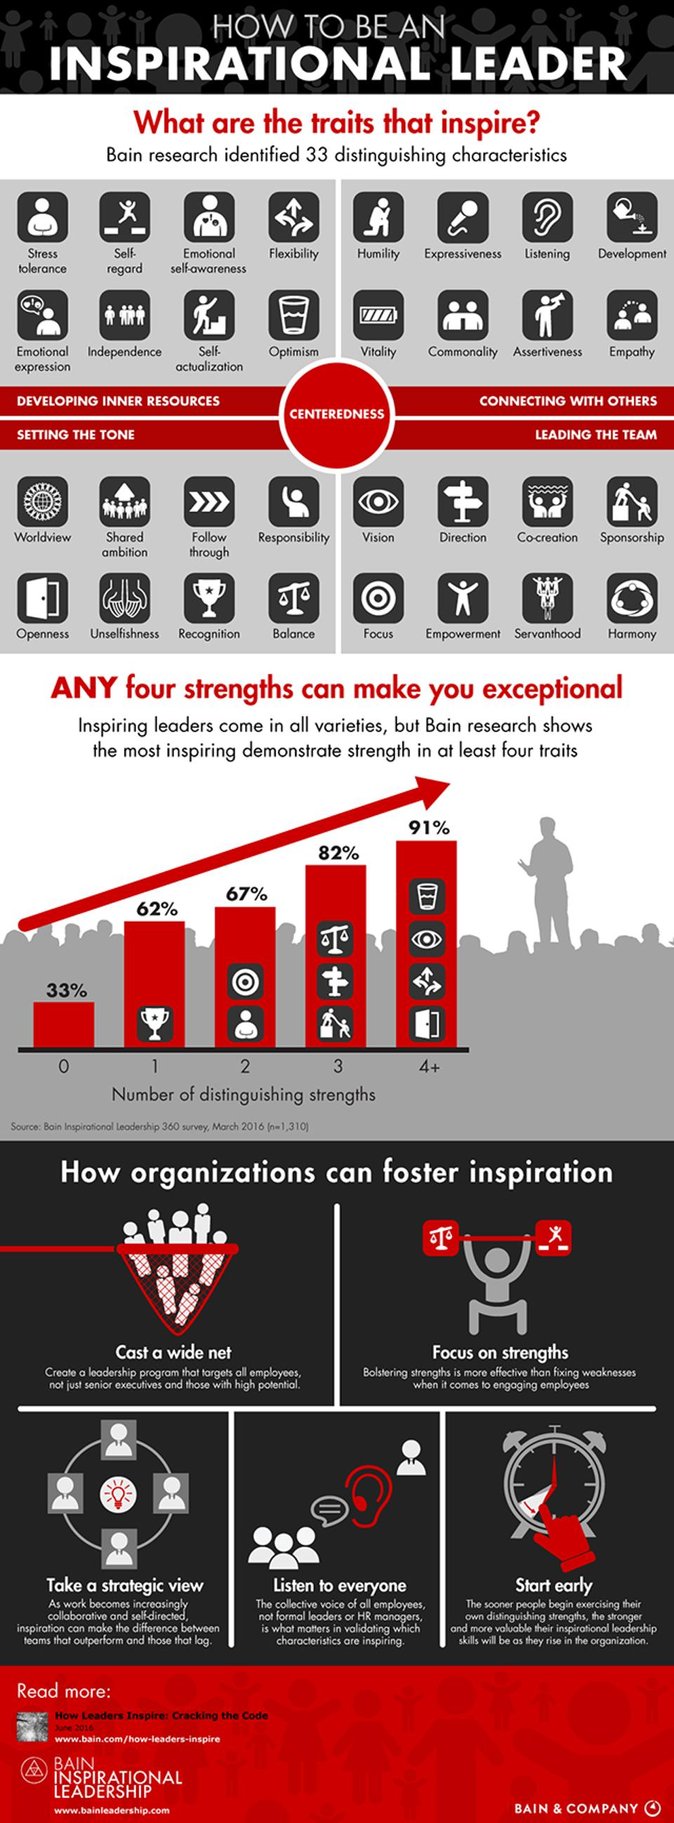 Inspirational-Leadership-infographic-forbes.jpg